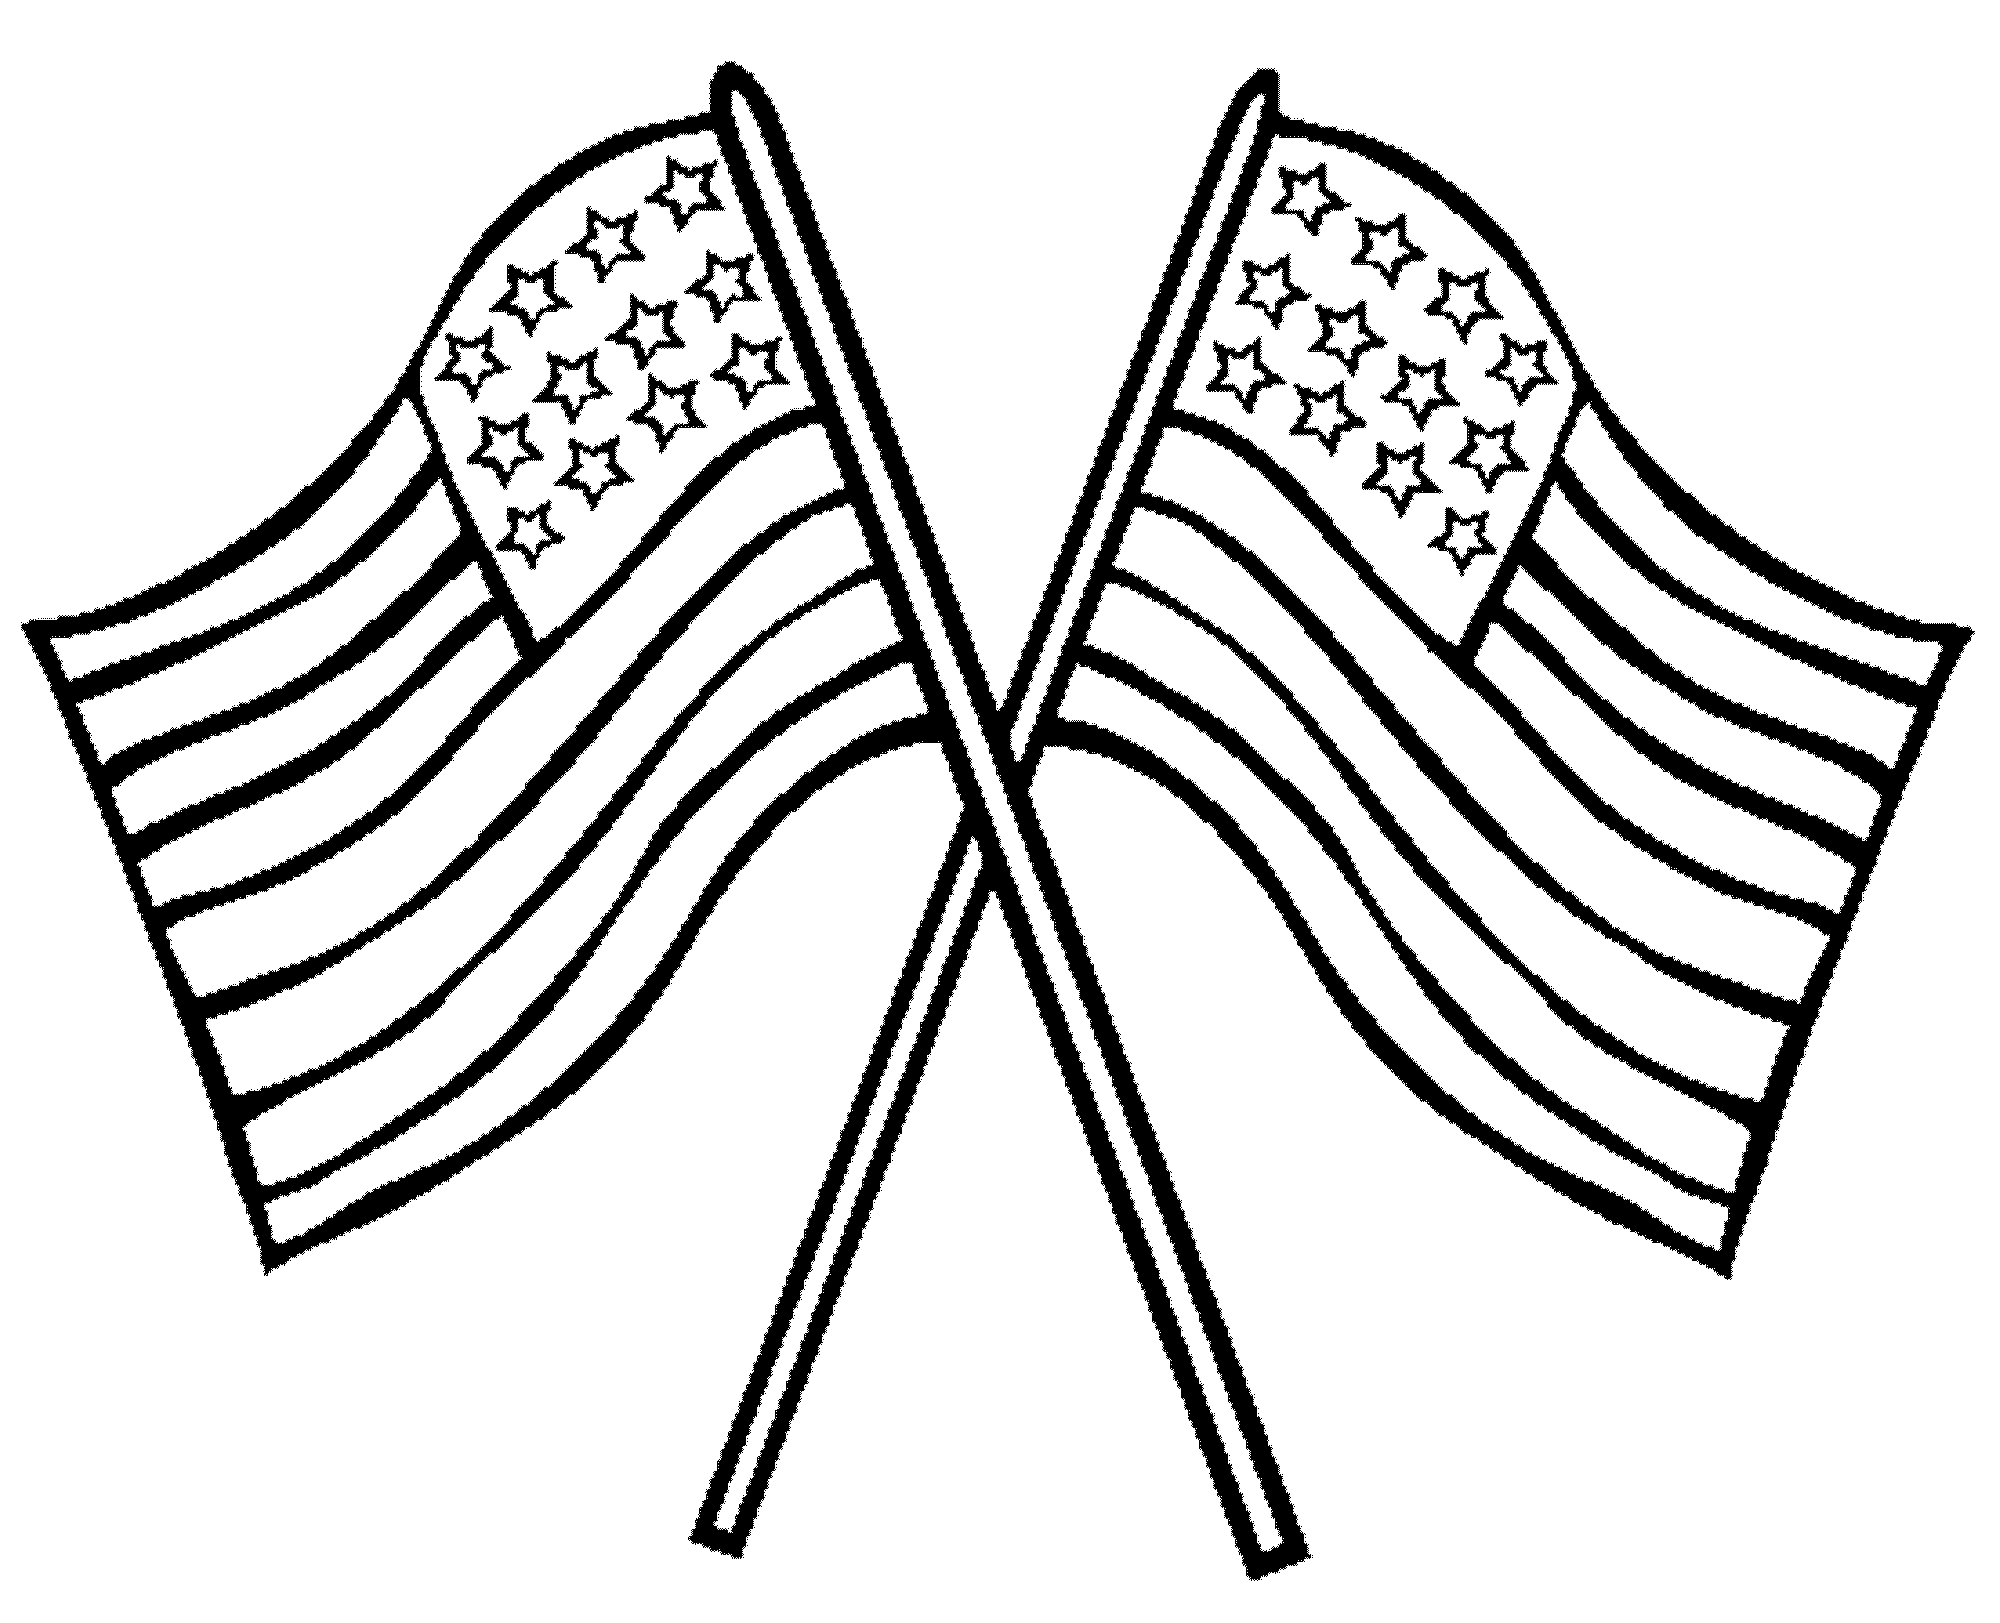 Image #19992 - Coloriage drapeau gratuit